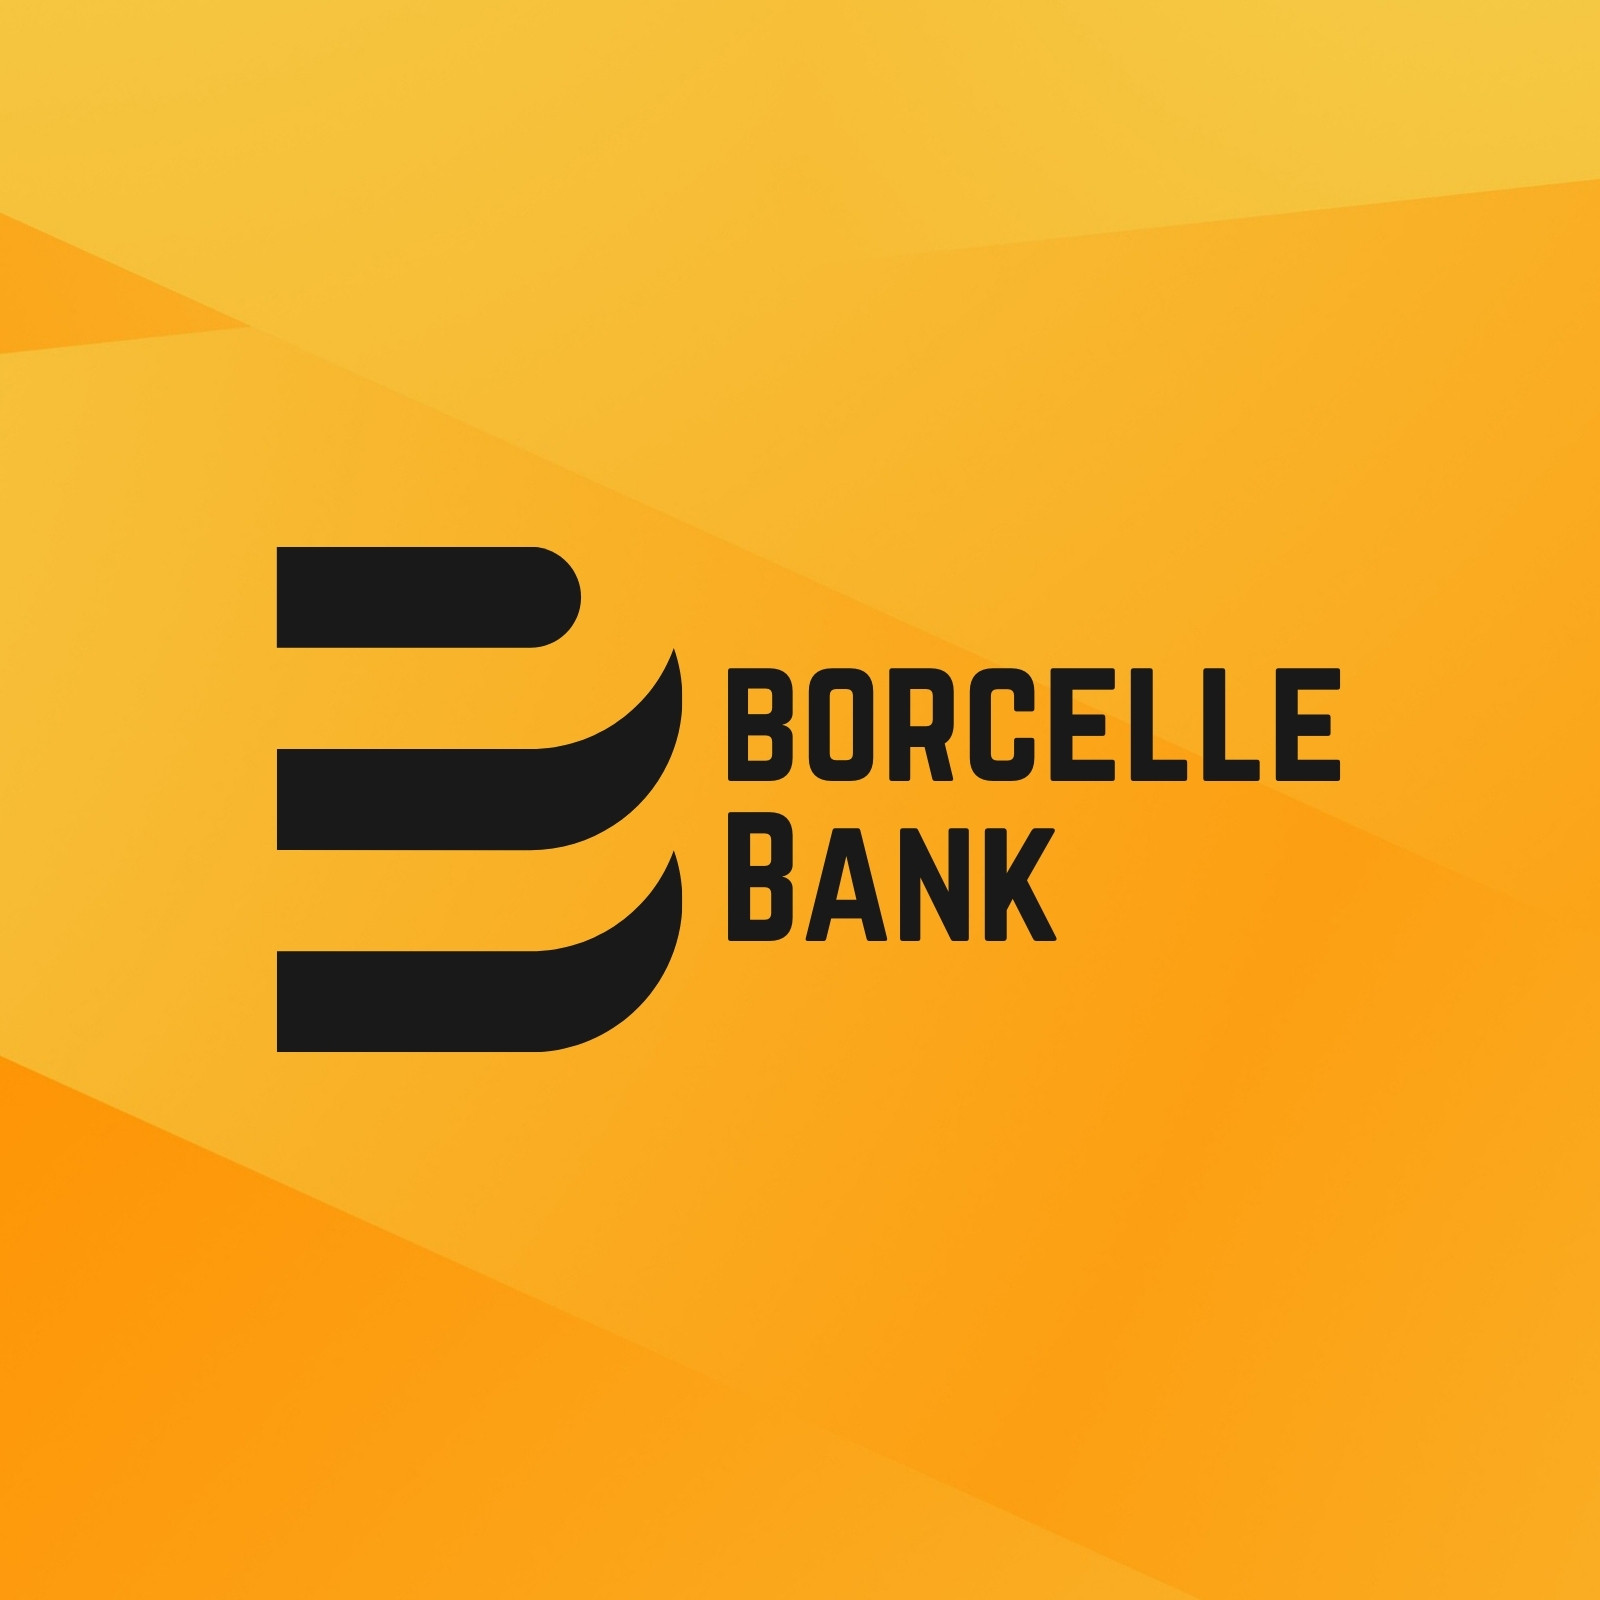 simple bank logo